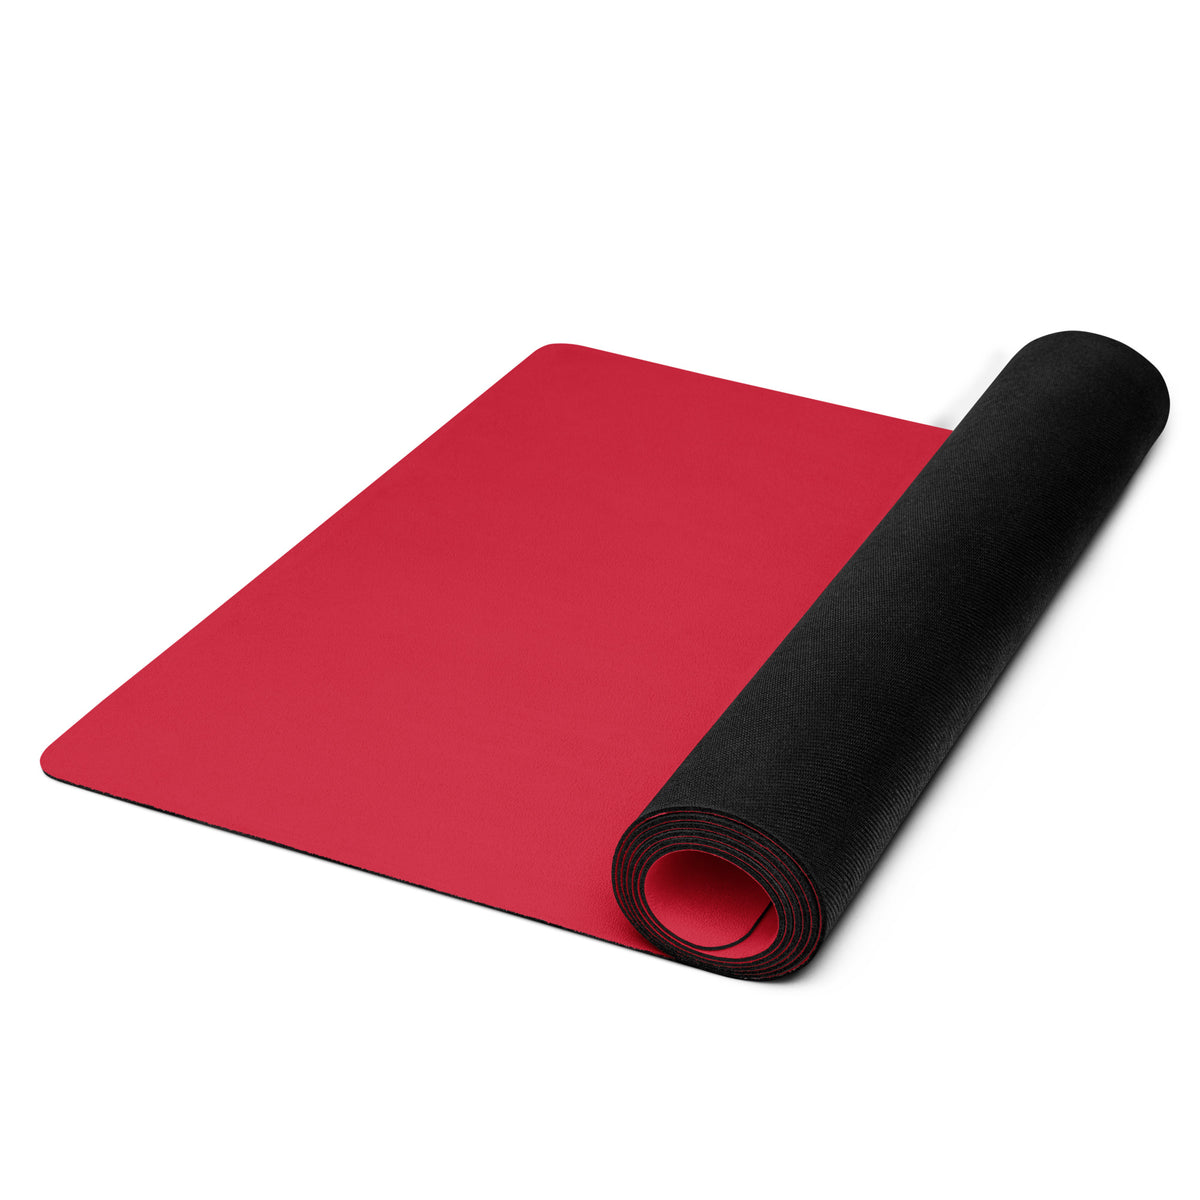 Red Upstormed Yoga Mat